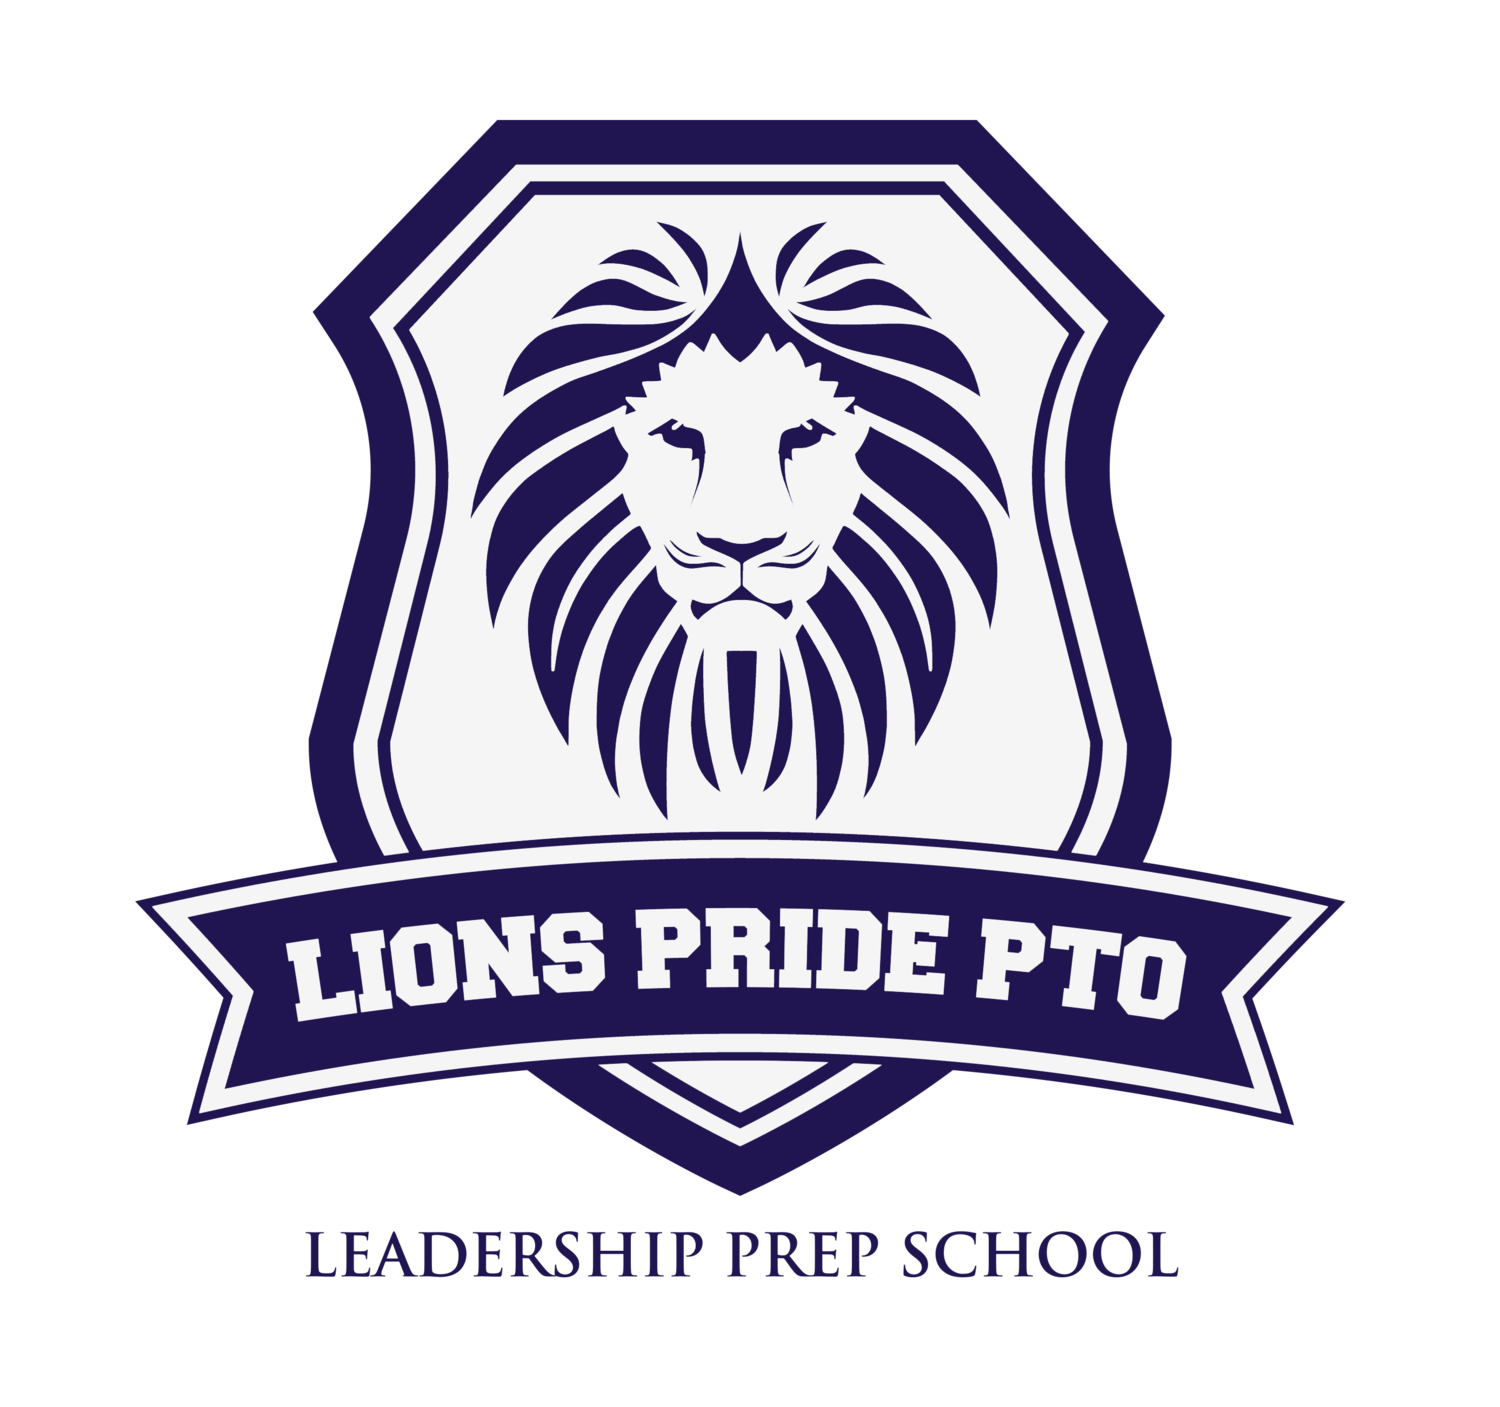 LPS Lions Pride PTO